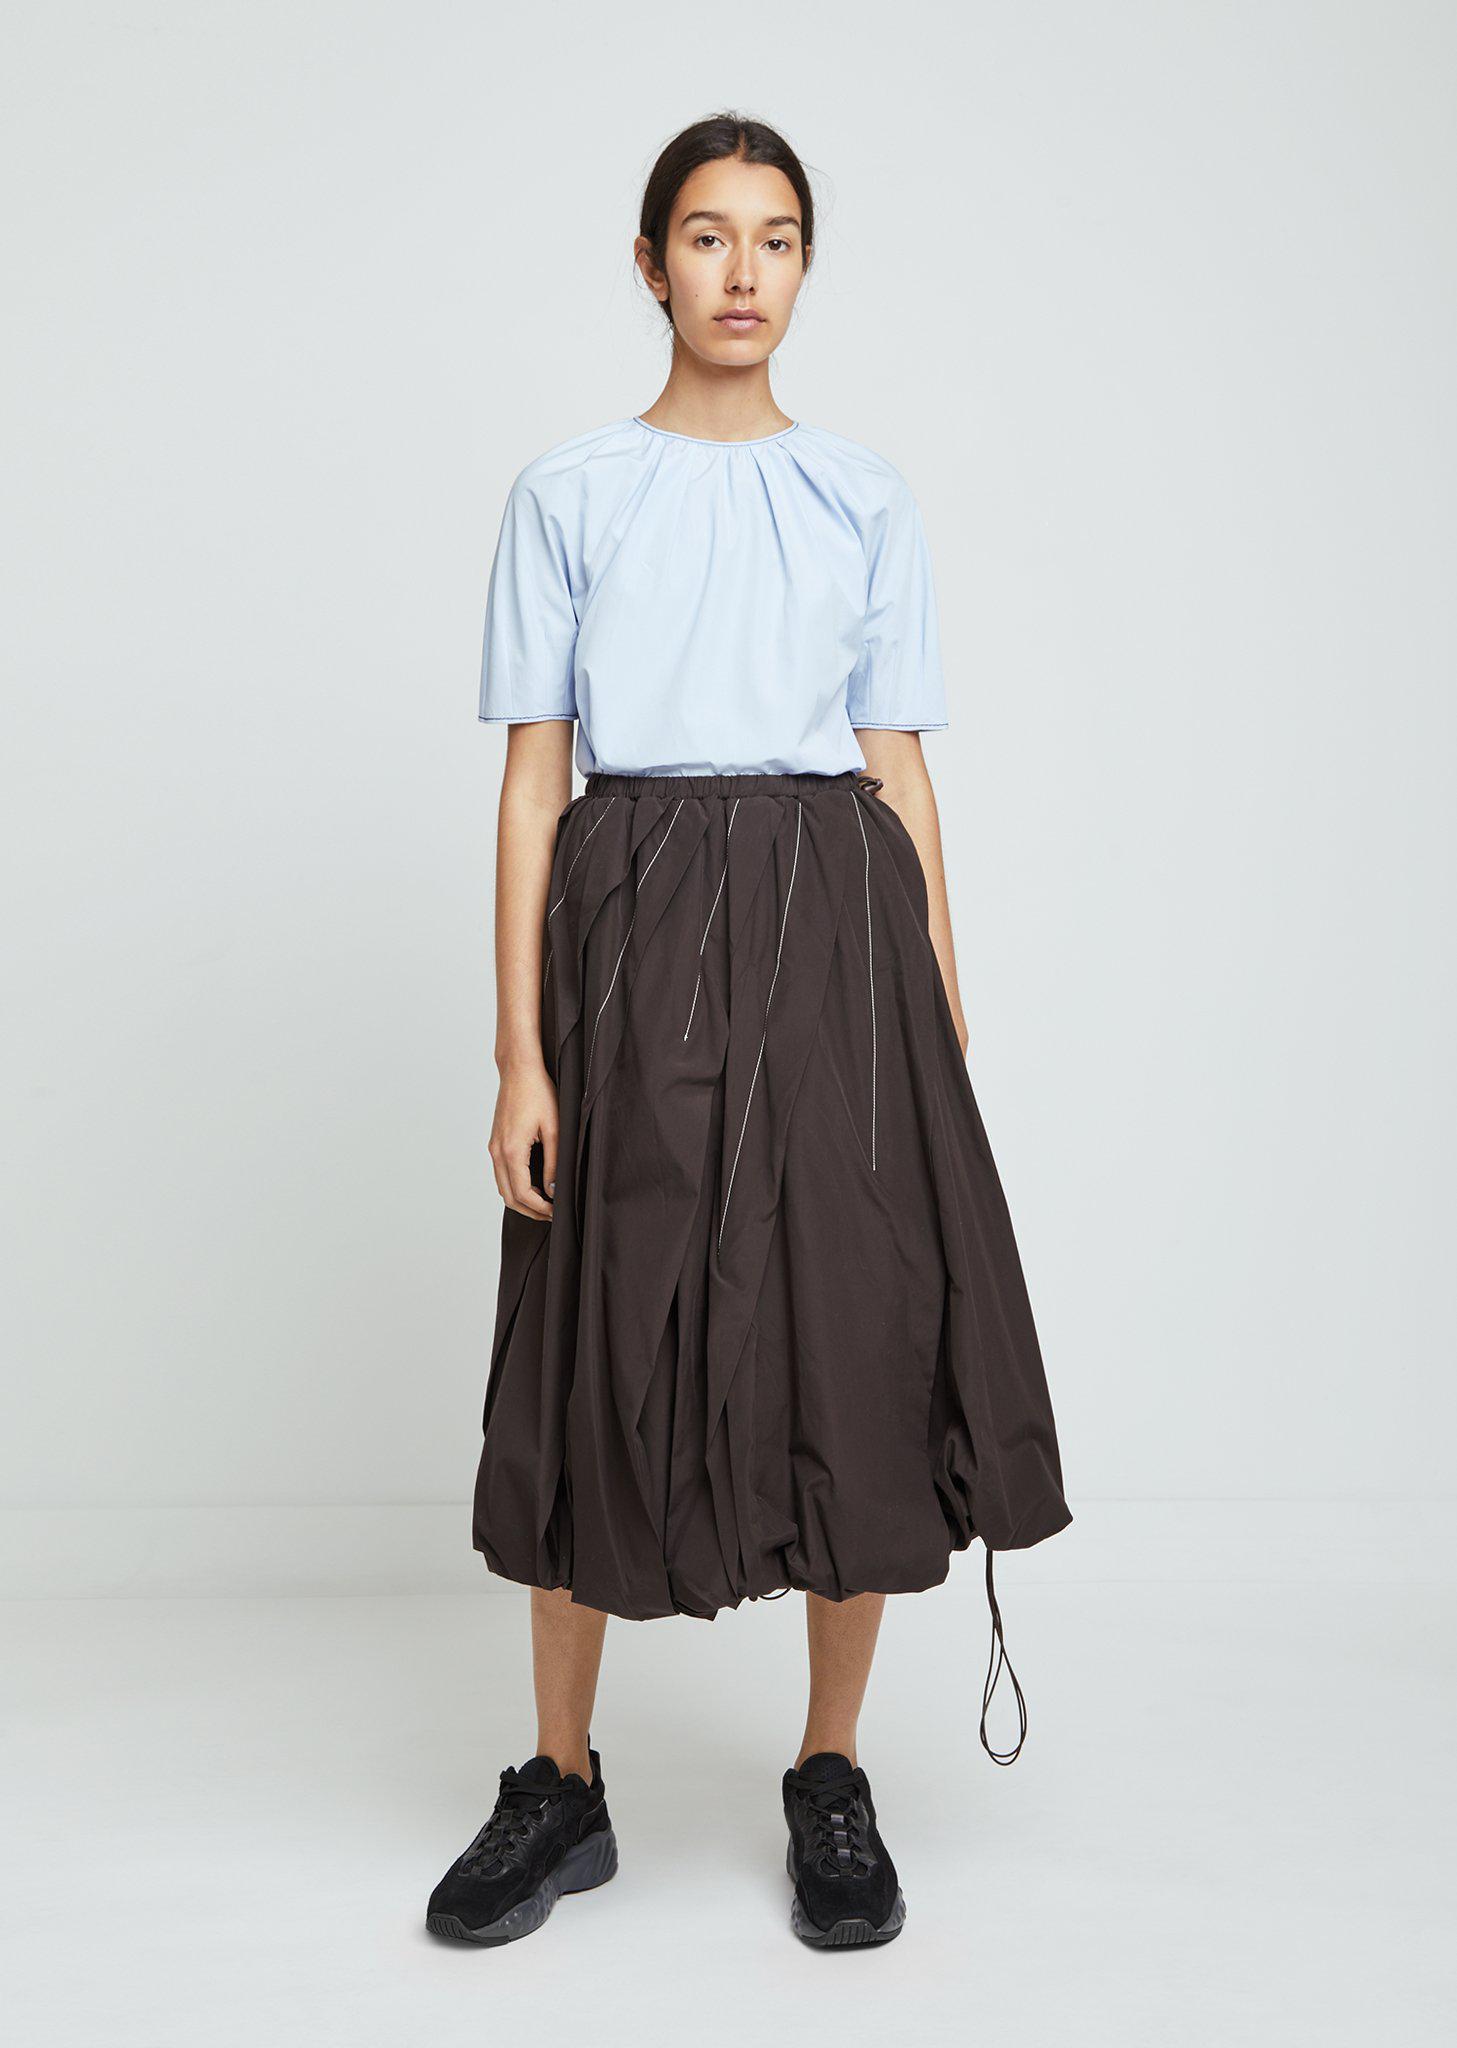 Marni Cotton Poplin Balloon Skirt in Brown | Lyst